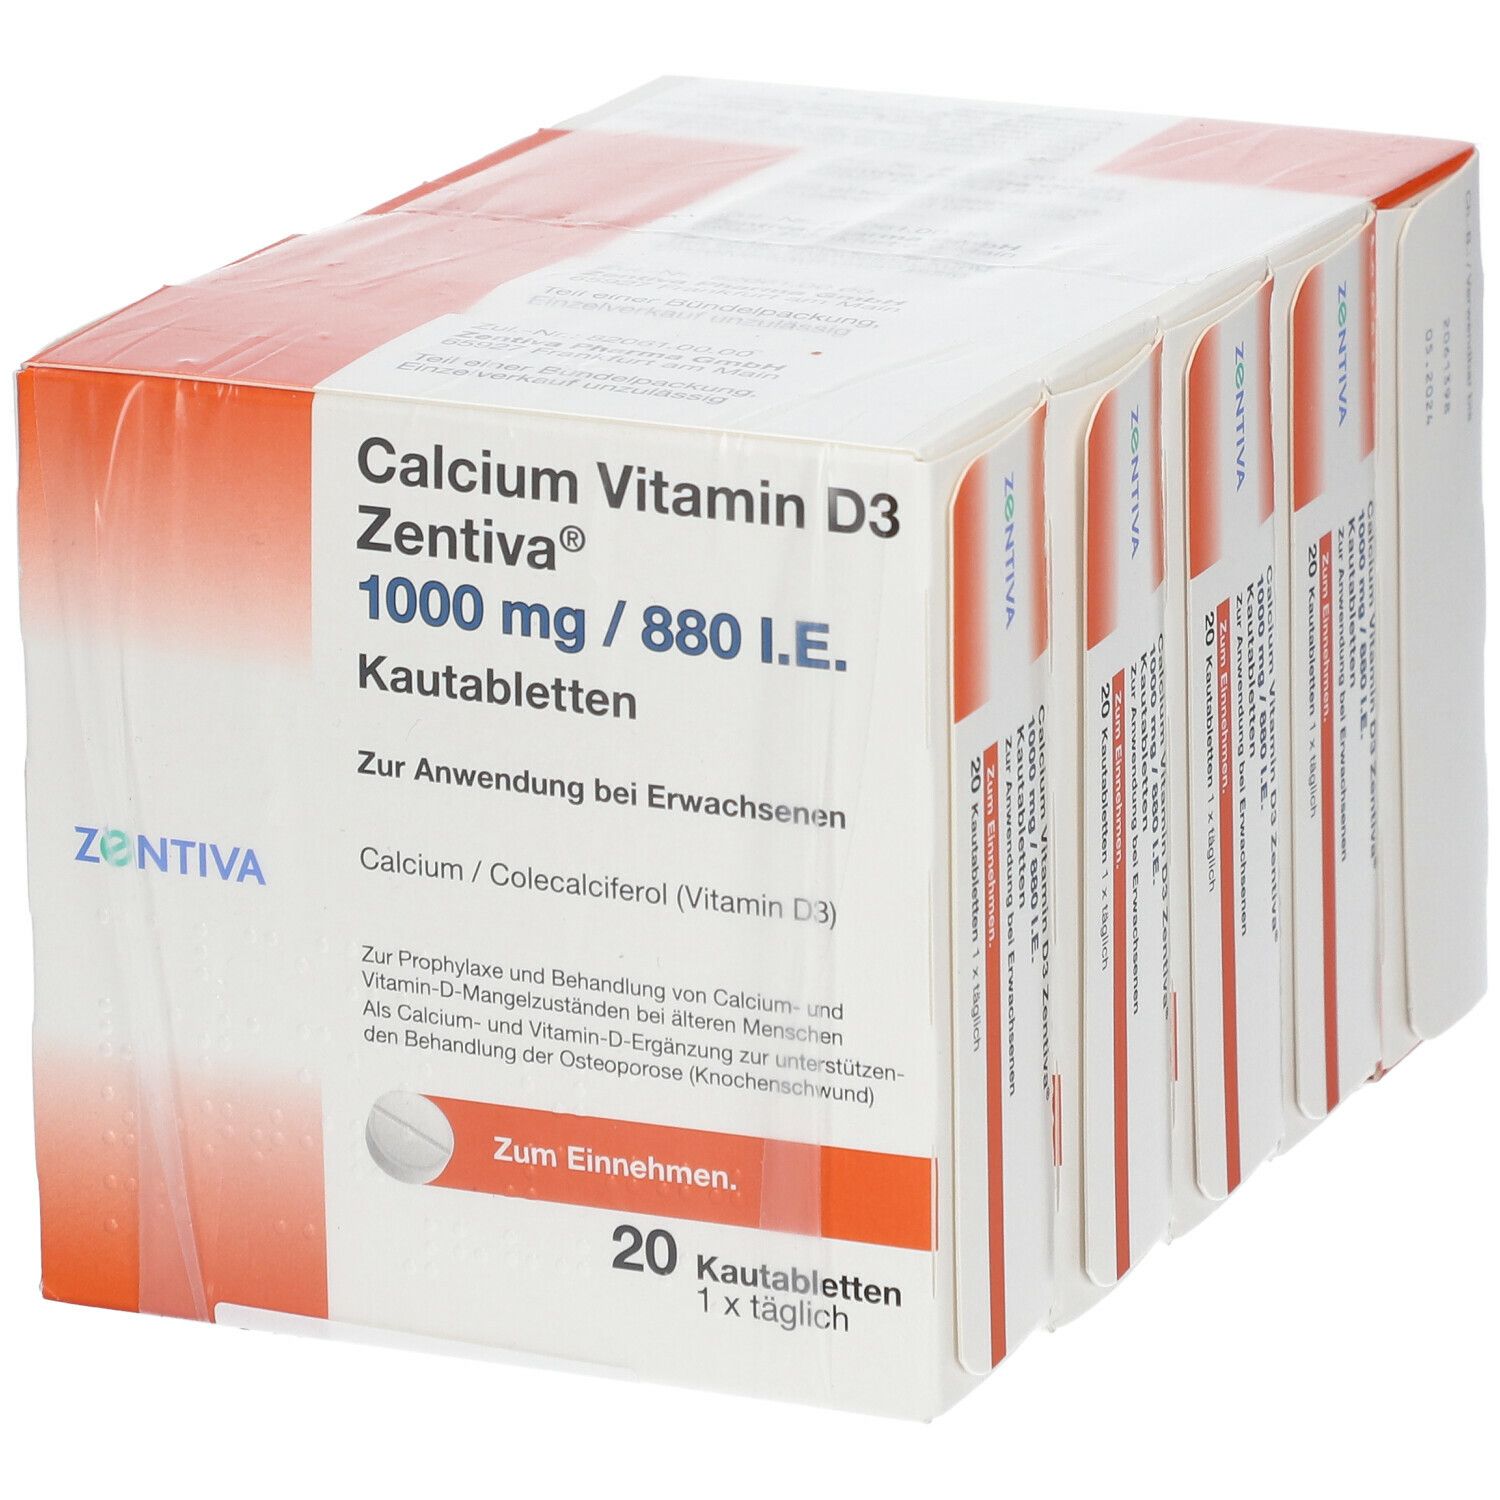 Calcium Vitamin D3 Zentiva® 1000 mg/880 I.E.